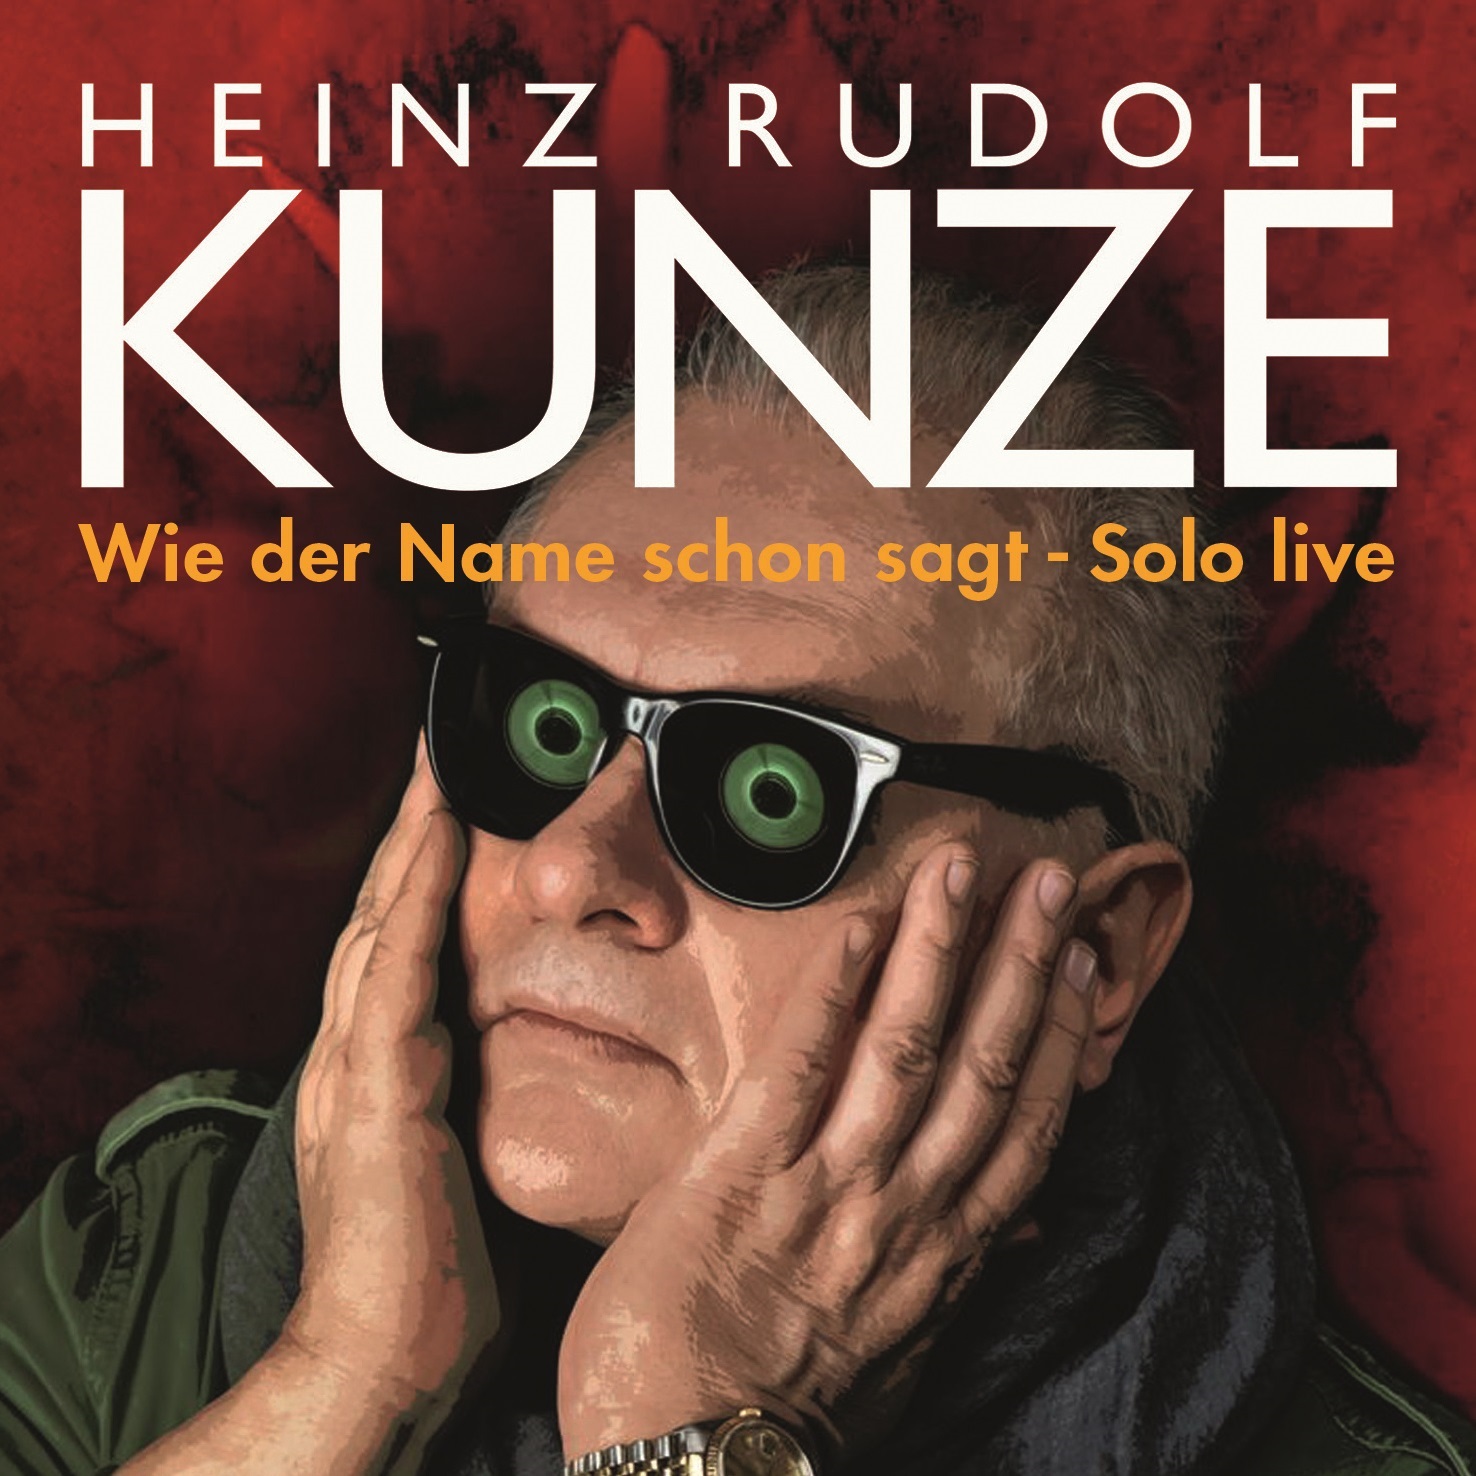 News: Heinz Rudolf Kunze – „Wie der Name schon sagt –Solo live“ am 13.11.2020 im Handel